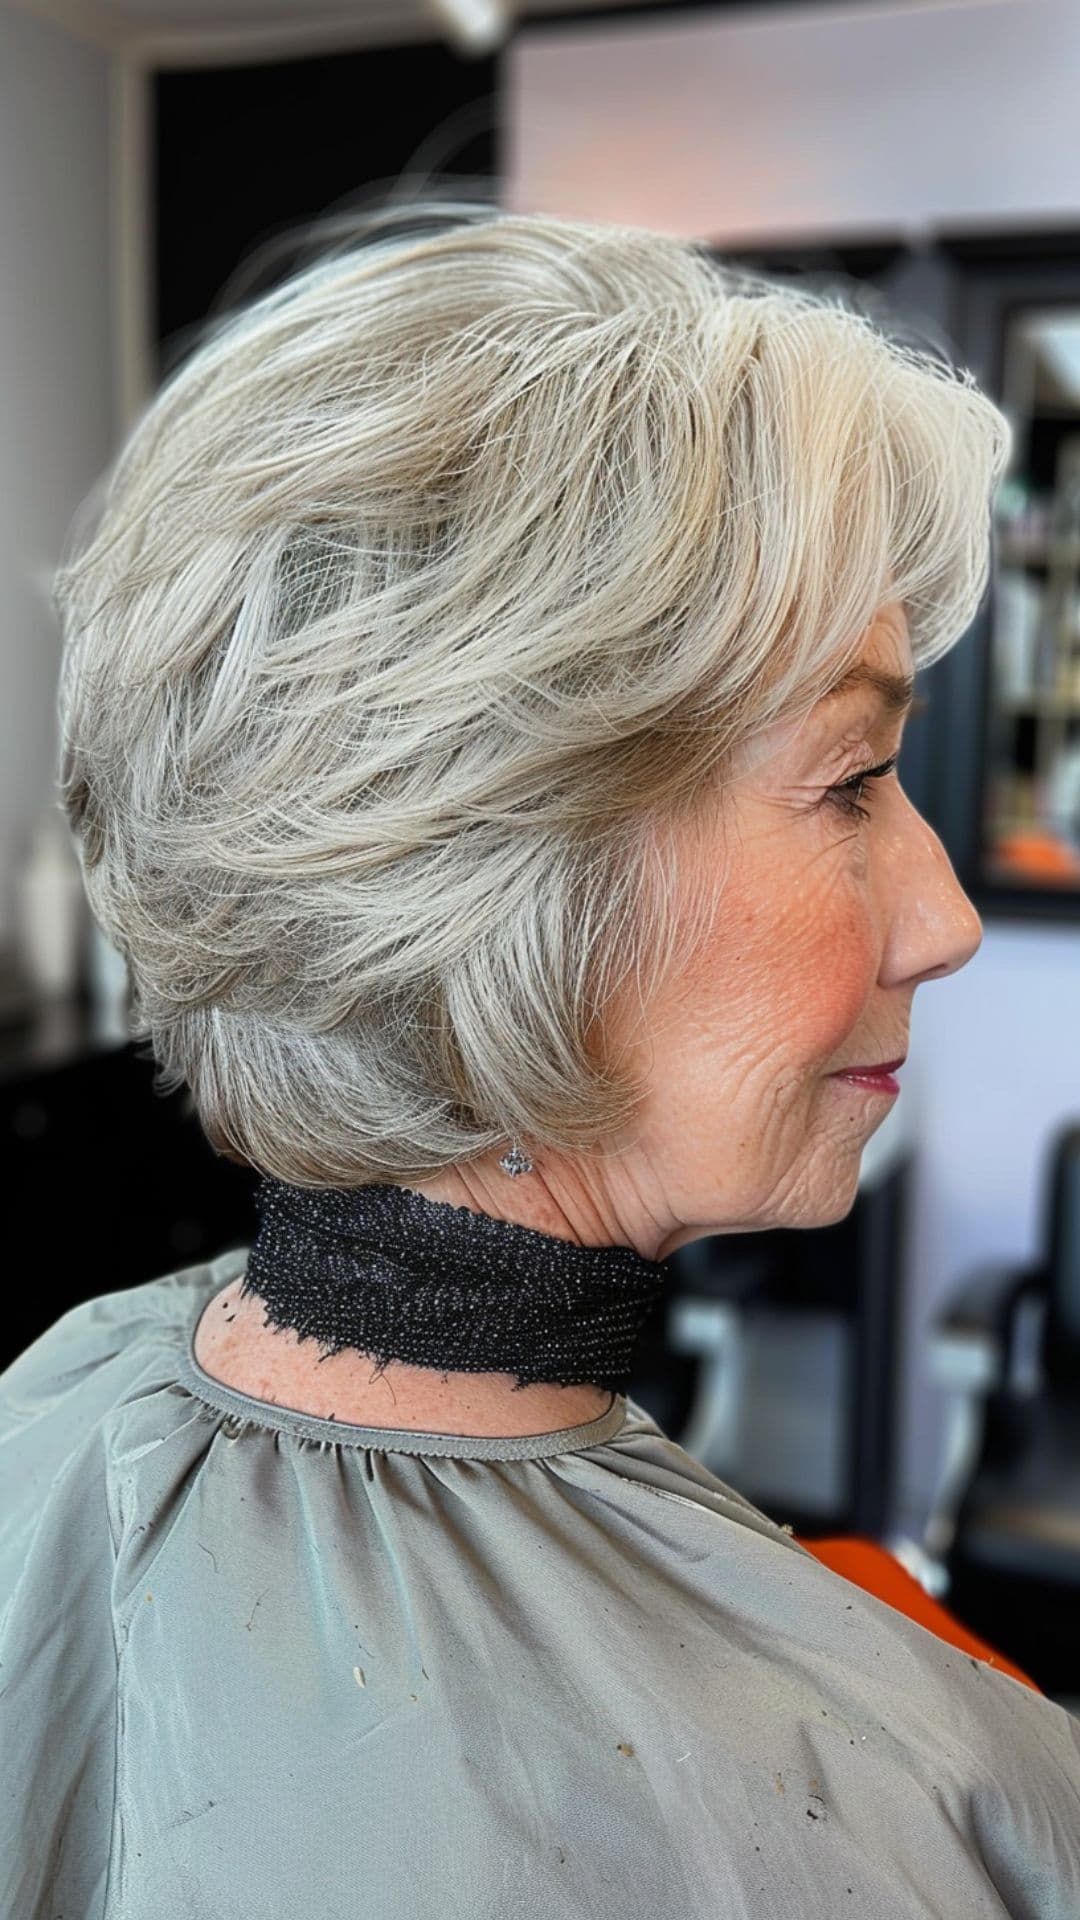 An old woman modelling a classic layered bob cut.